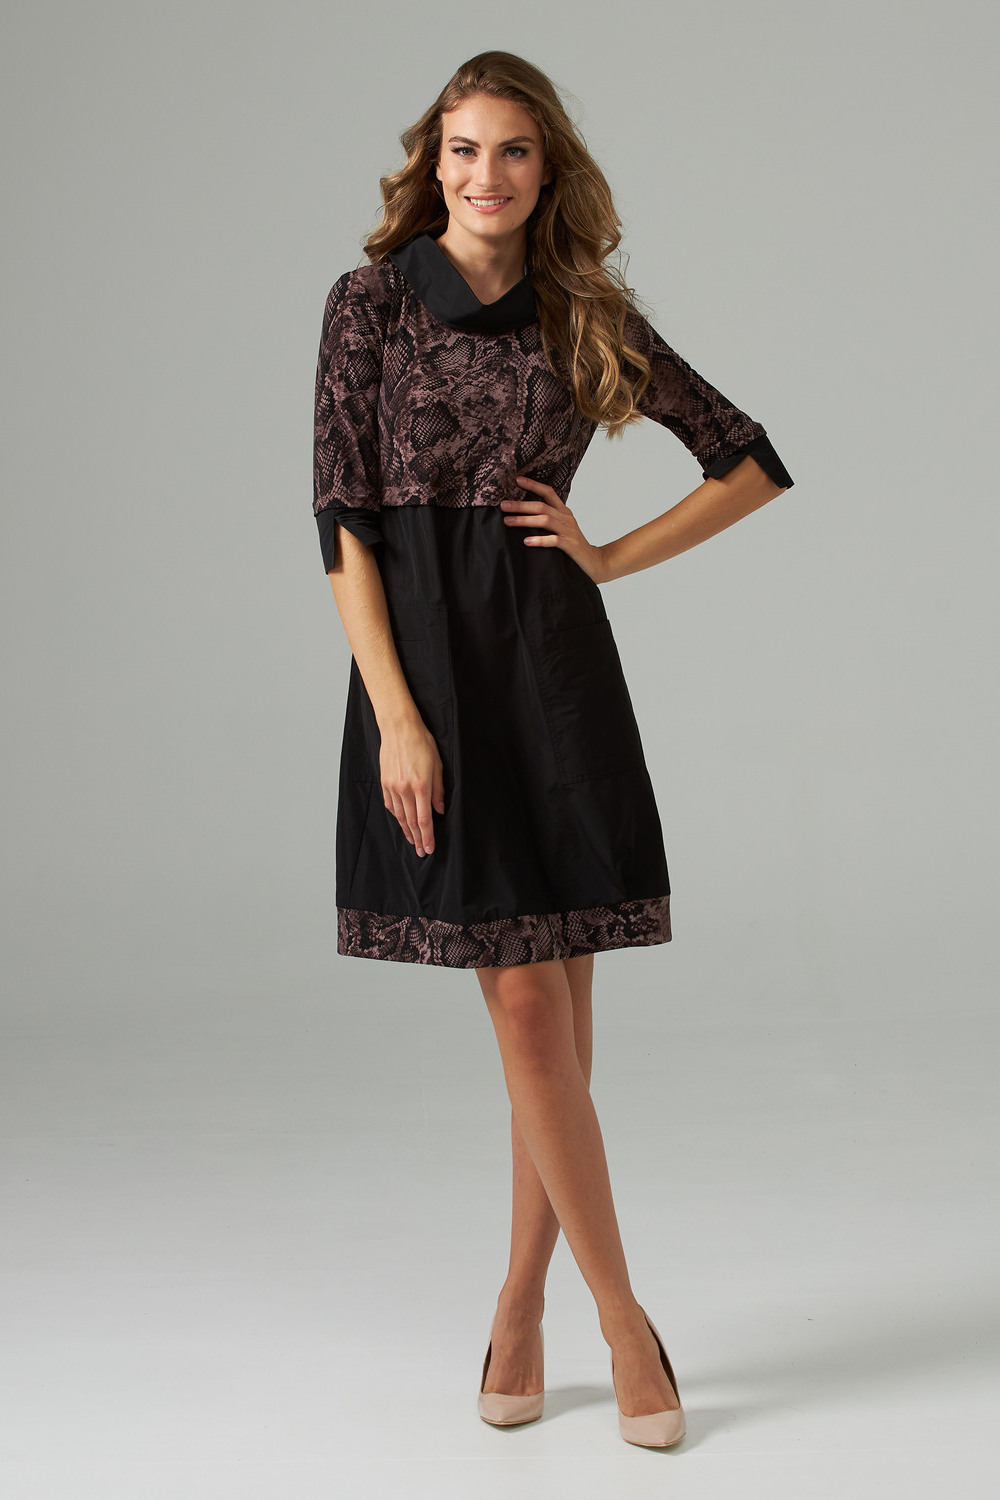 Joseph Ribkoff Dress Style 203690. Black/brown